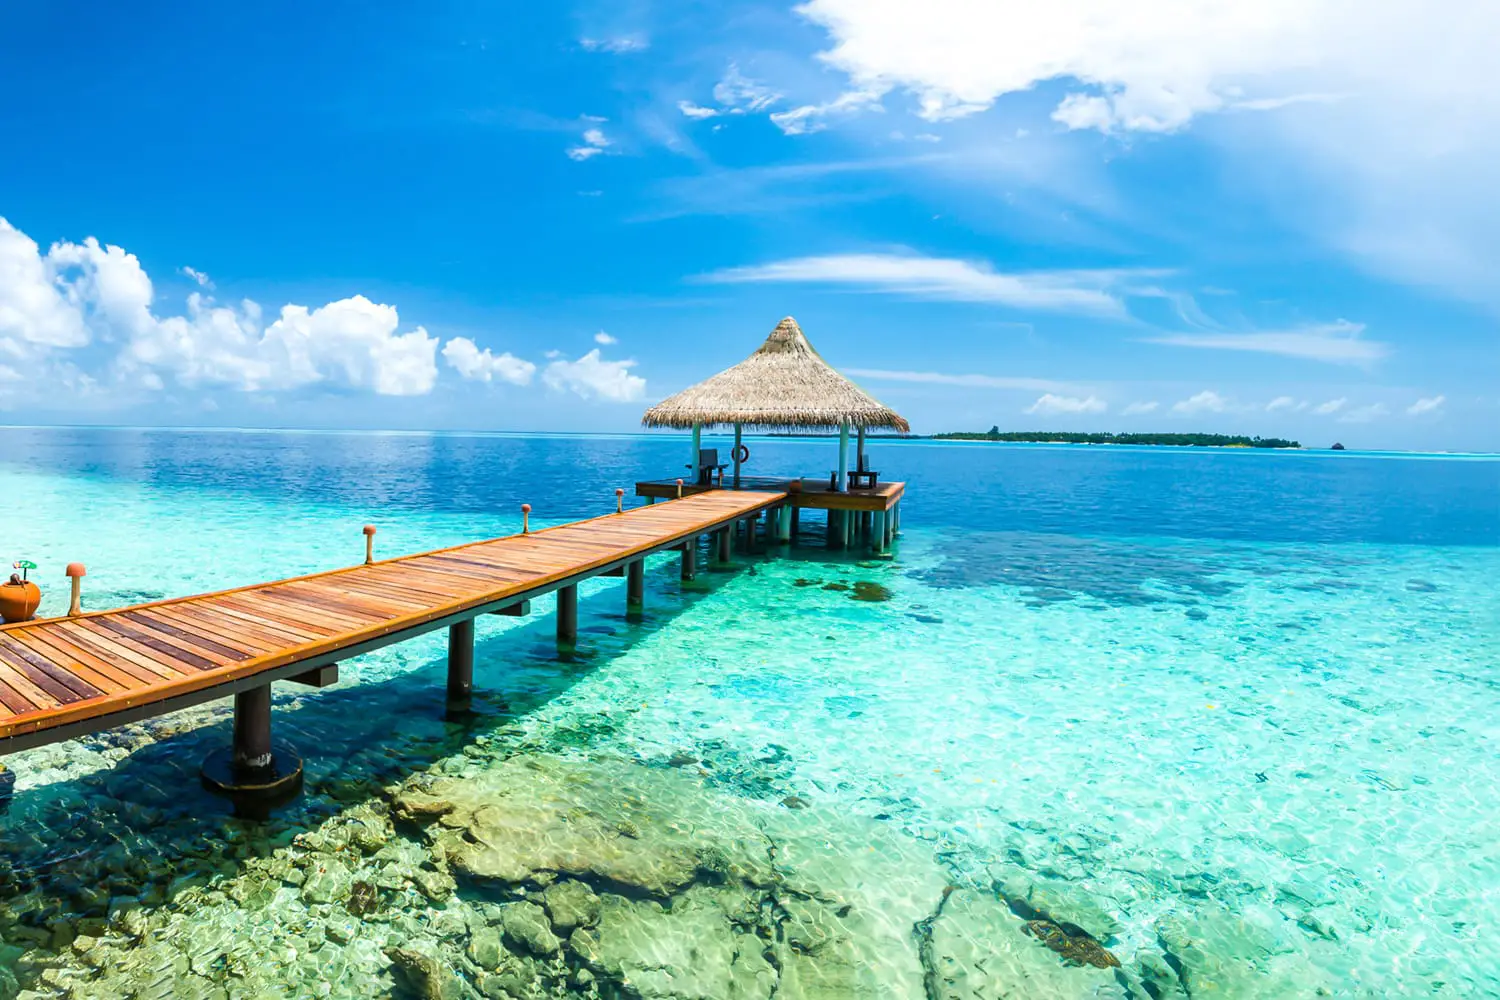 Tropical paradise landscape in Maldives